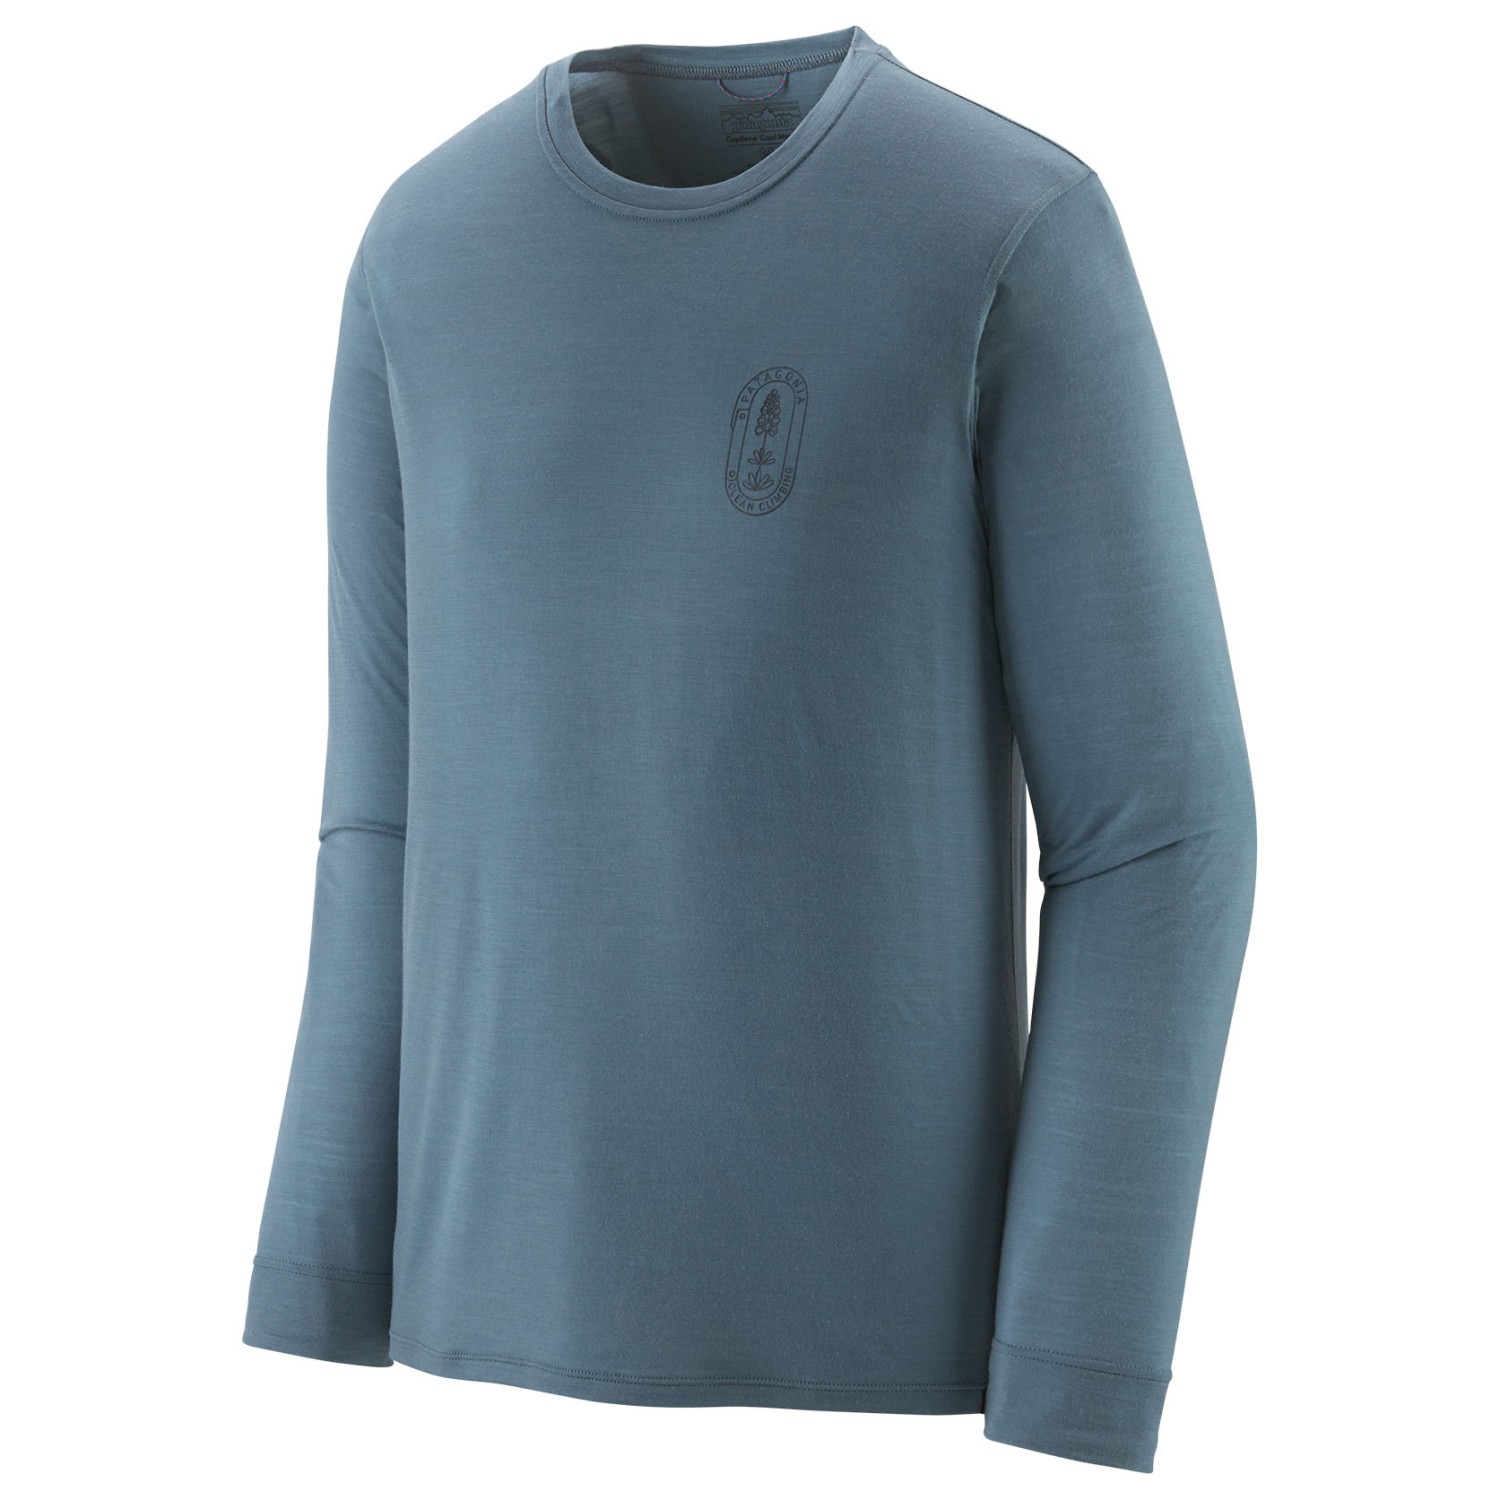 Рубашка из мериноса Patagonia L/S Cap Cool Merino Graphic Shirt, цвет Clean Climb Bloom/Utility Blue цена и фото